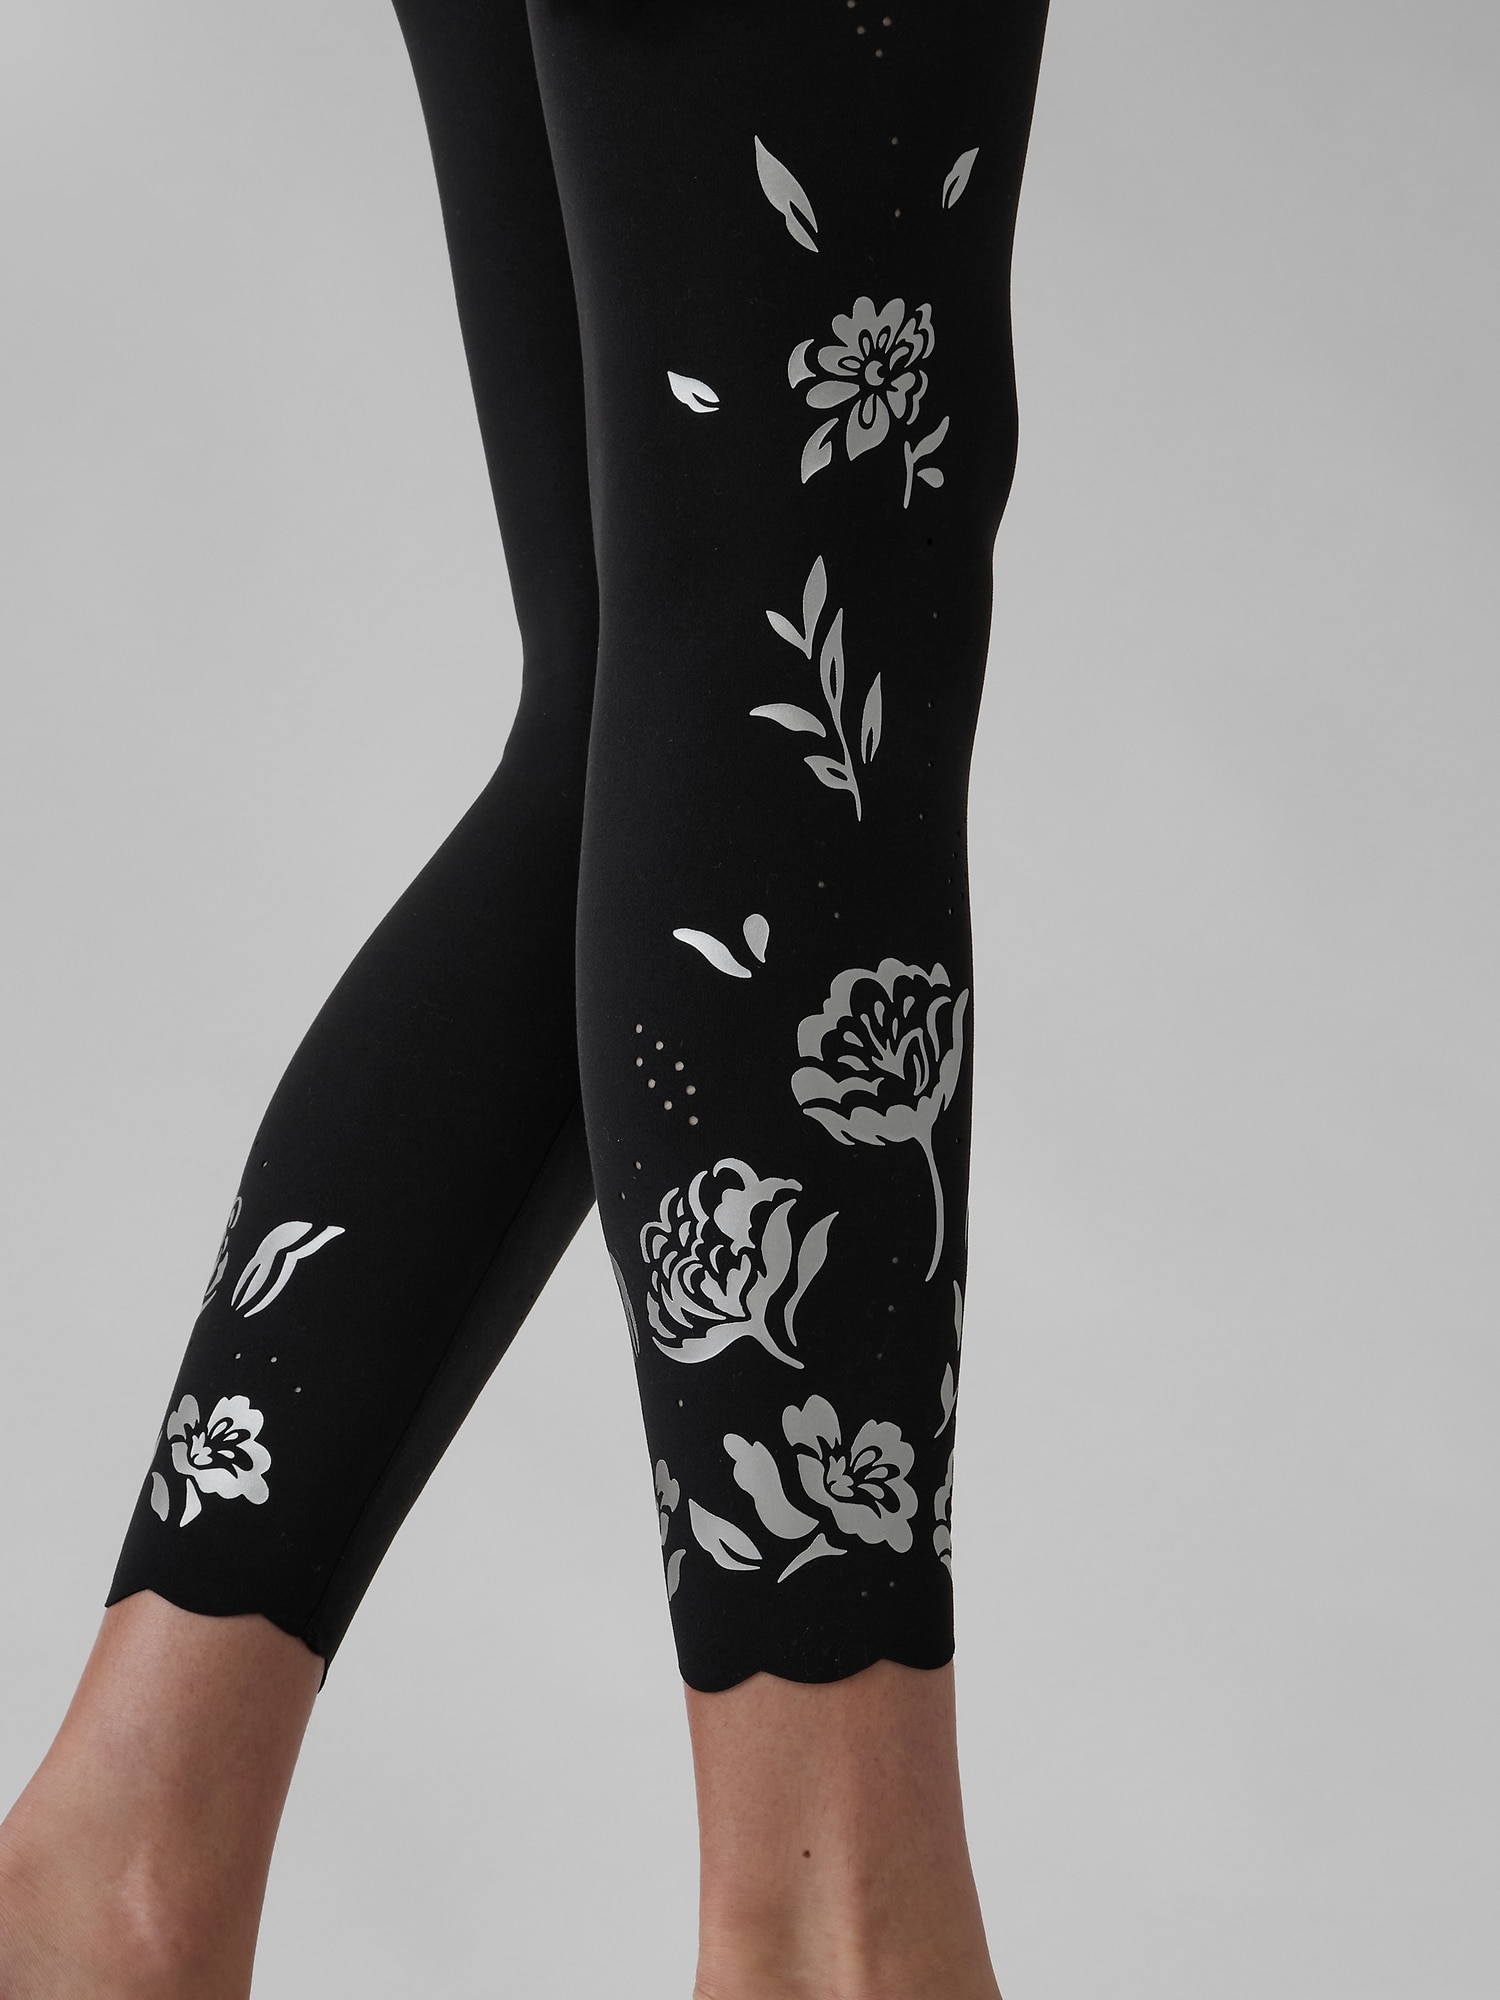 Athleta XS Elation Eyelet 7/8 Tight Leggings Black, Soft! Cute Floral  Pattern